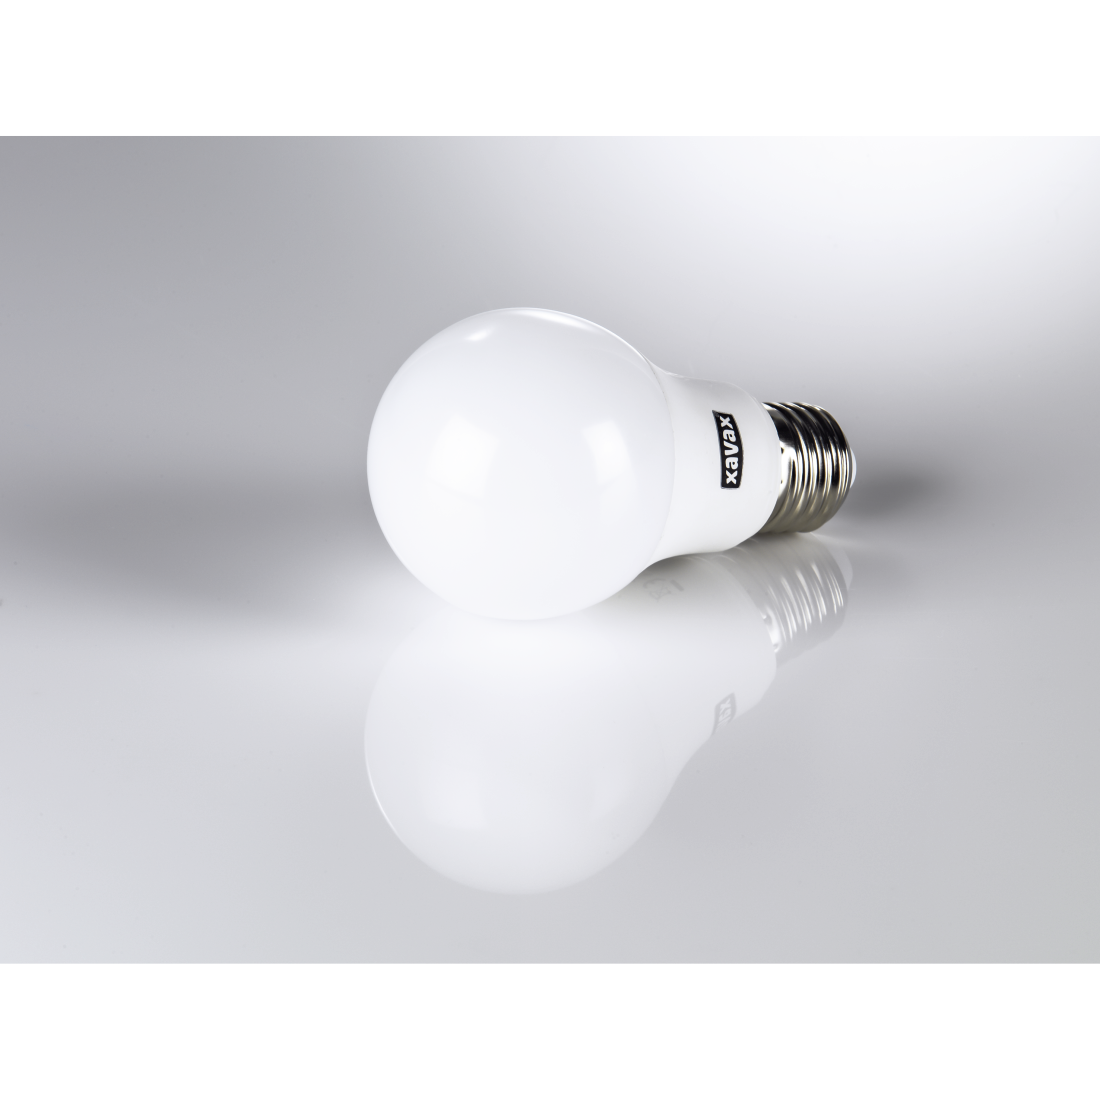 abx3 Druckfähige Abbildung 3 - Xavax, LED-Lampe, E27, 470lm ersetzt 40W, Glühlampe, Warmweiß, RA90